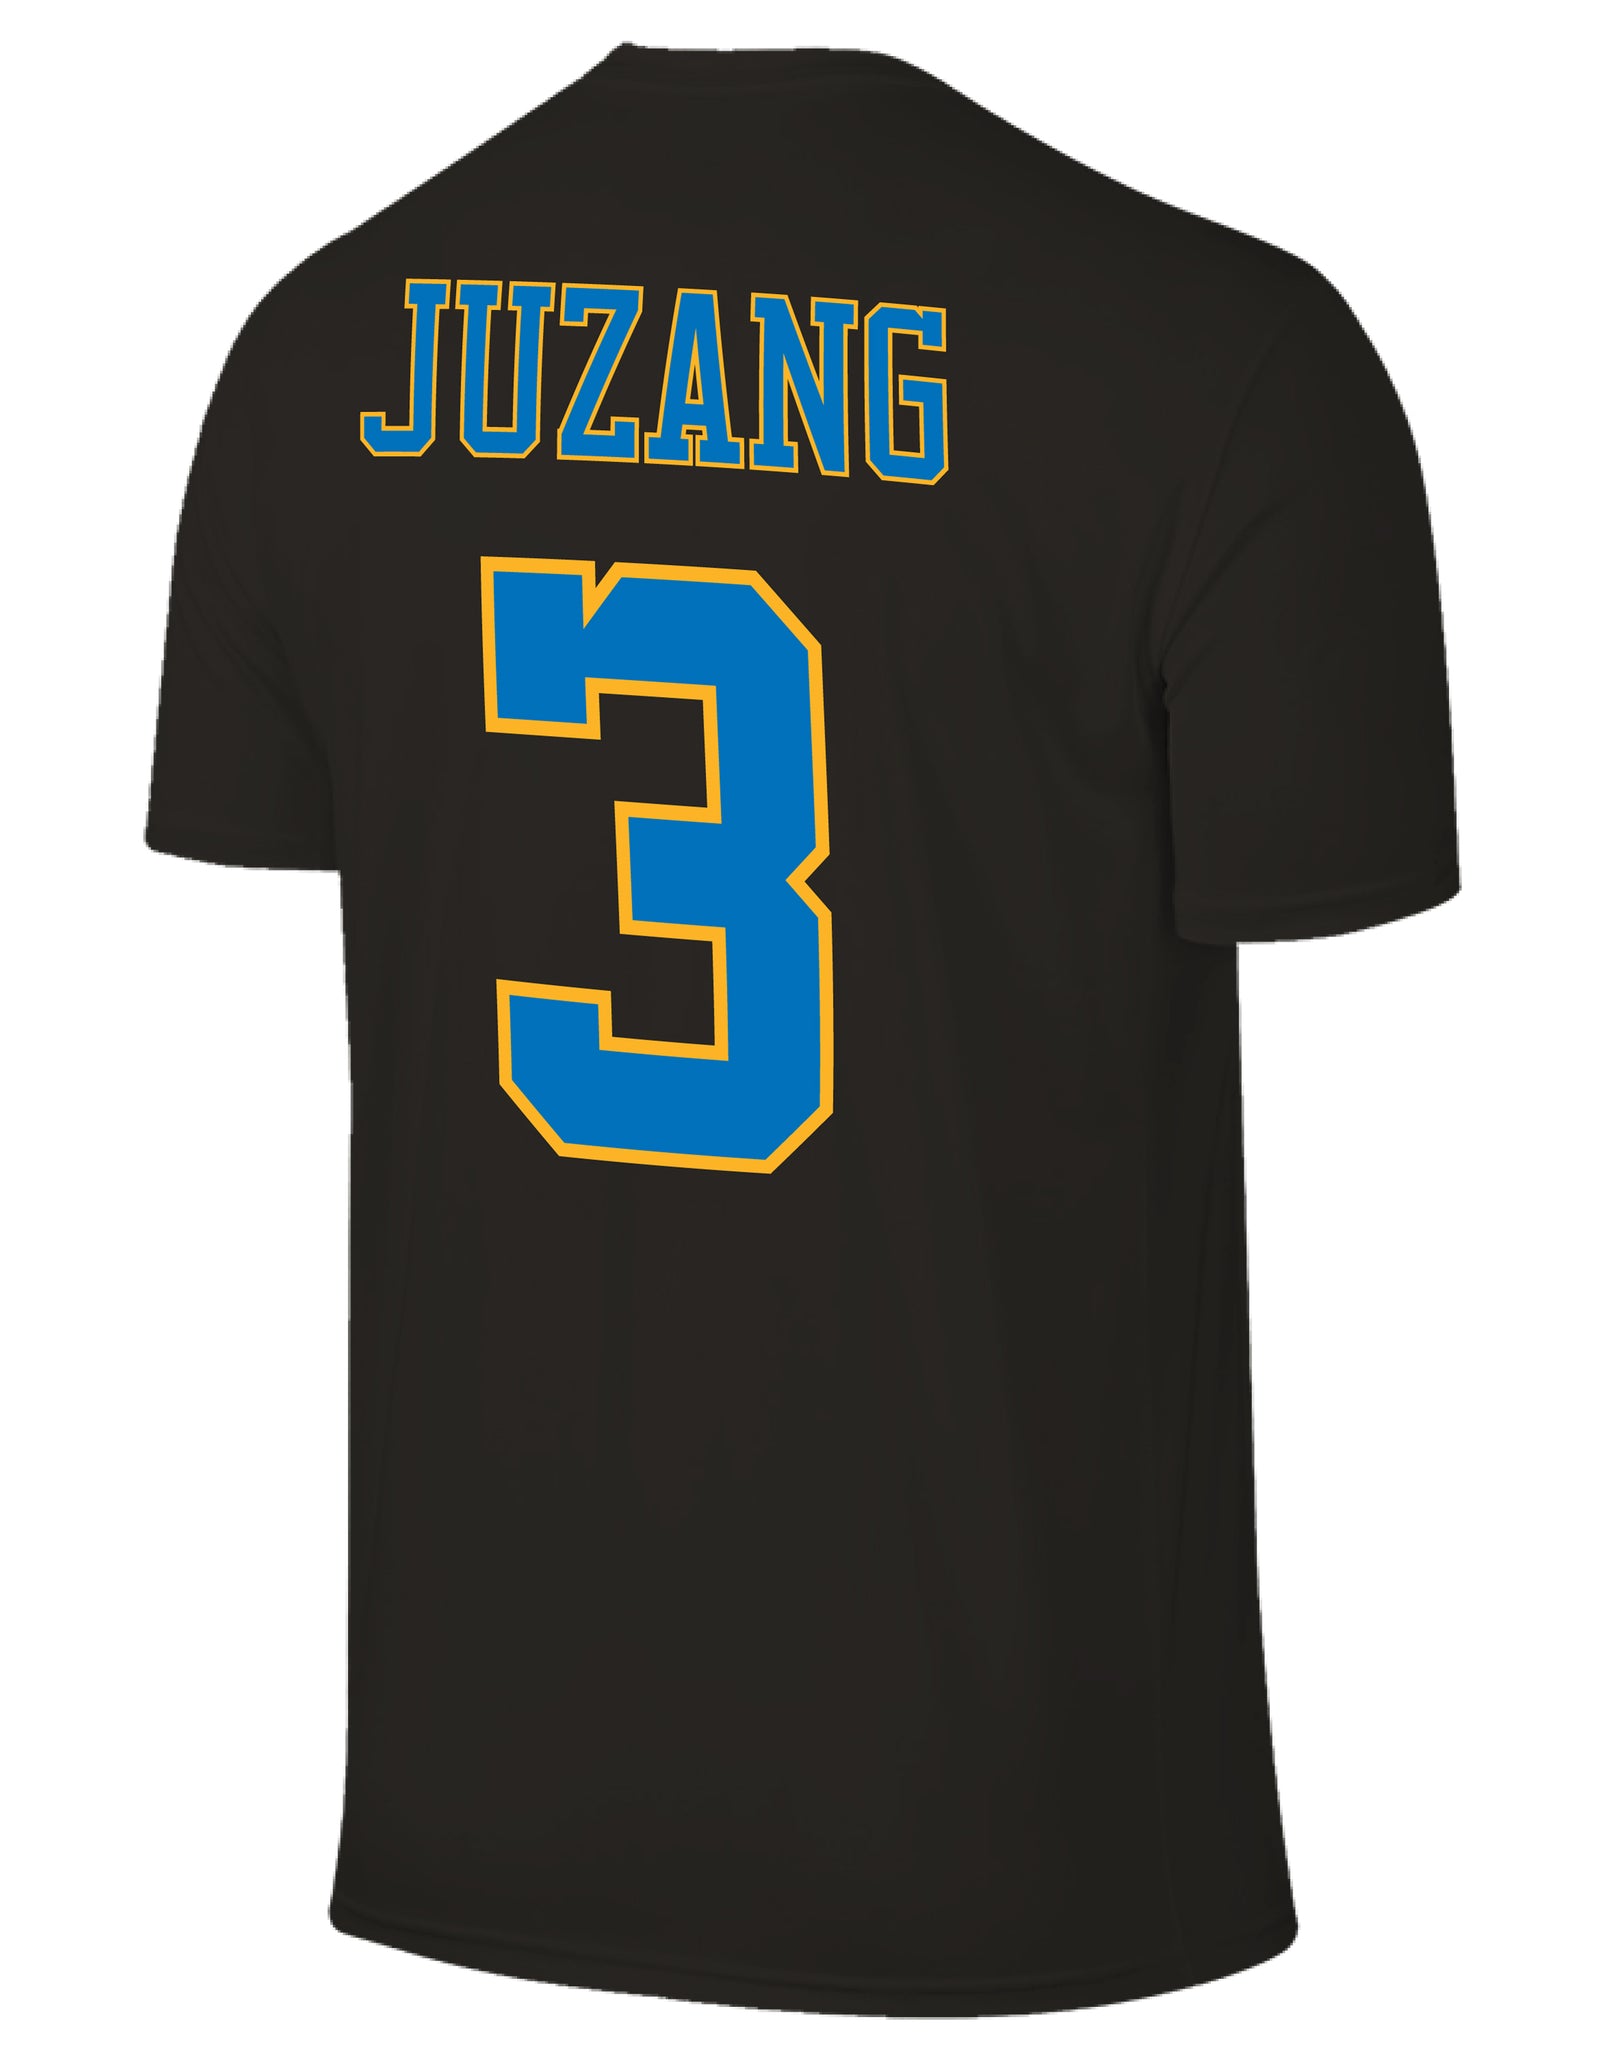 UCLA Bruins Johnny Juzang Throwback Jersey – ORIGINAL RETRO BRAND